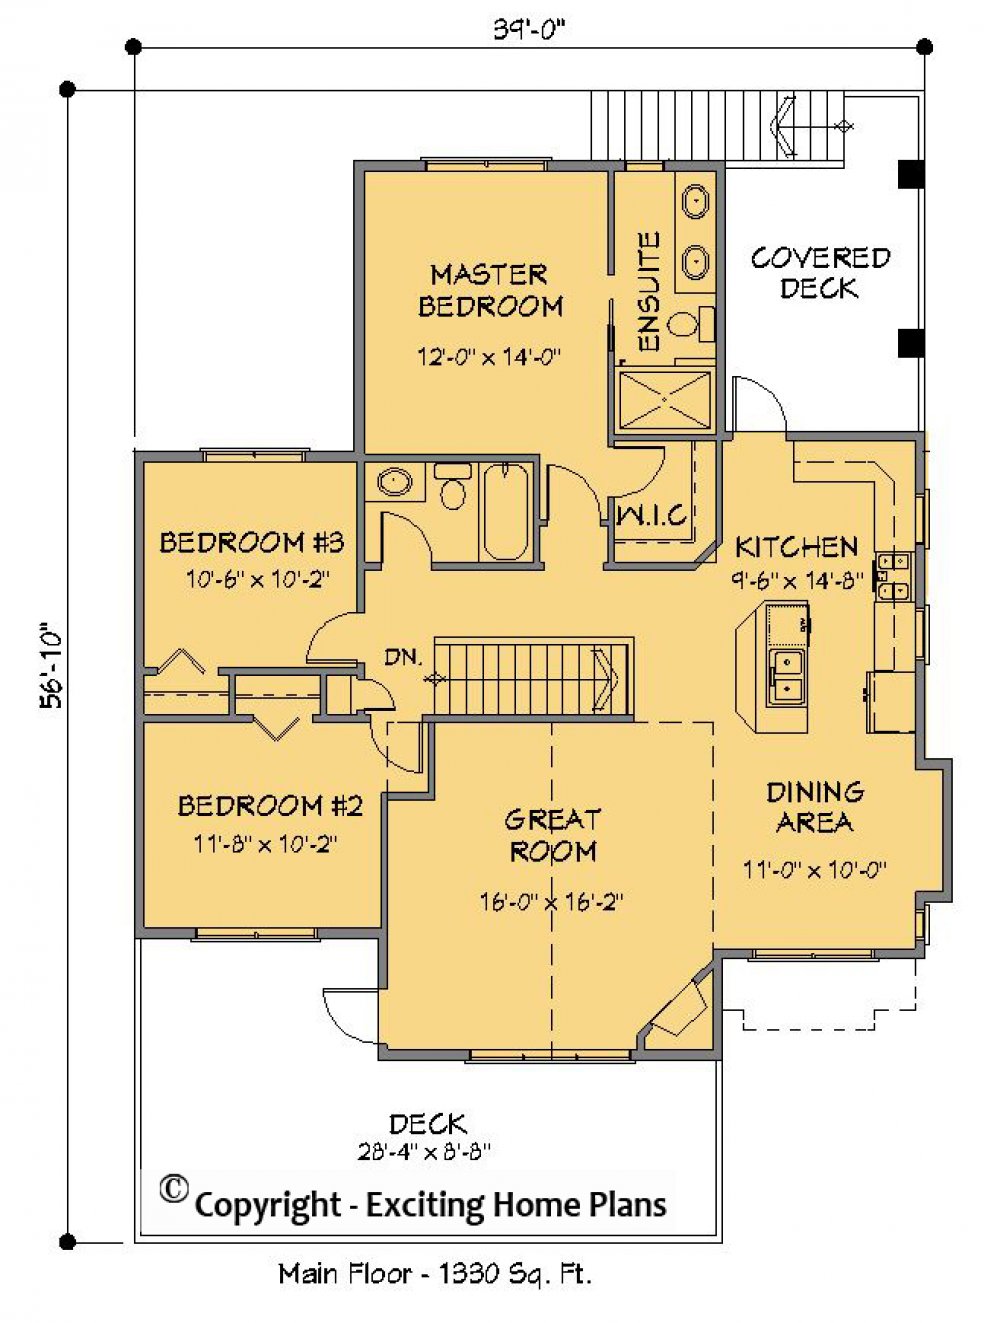 House Plan E1430-10 Main Floor Plan